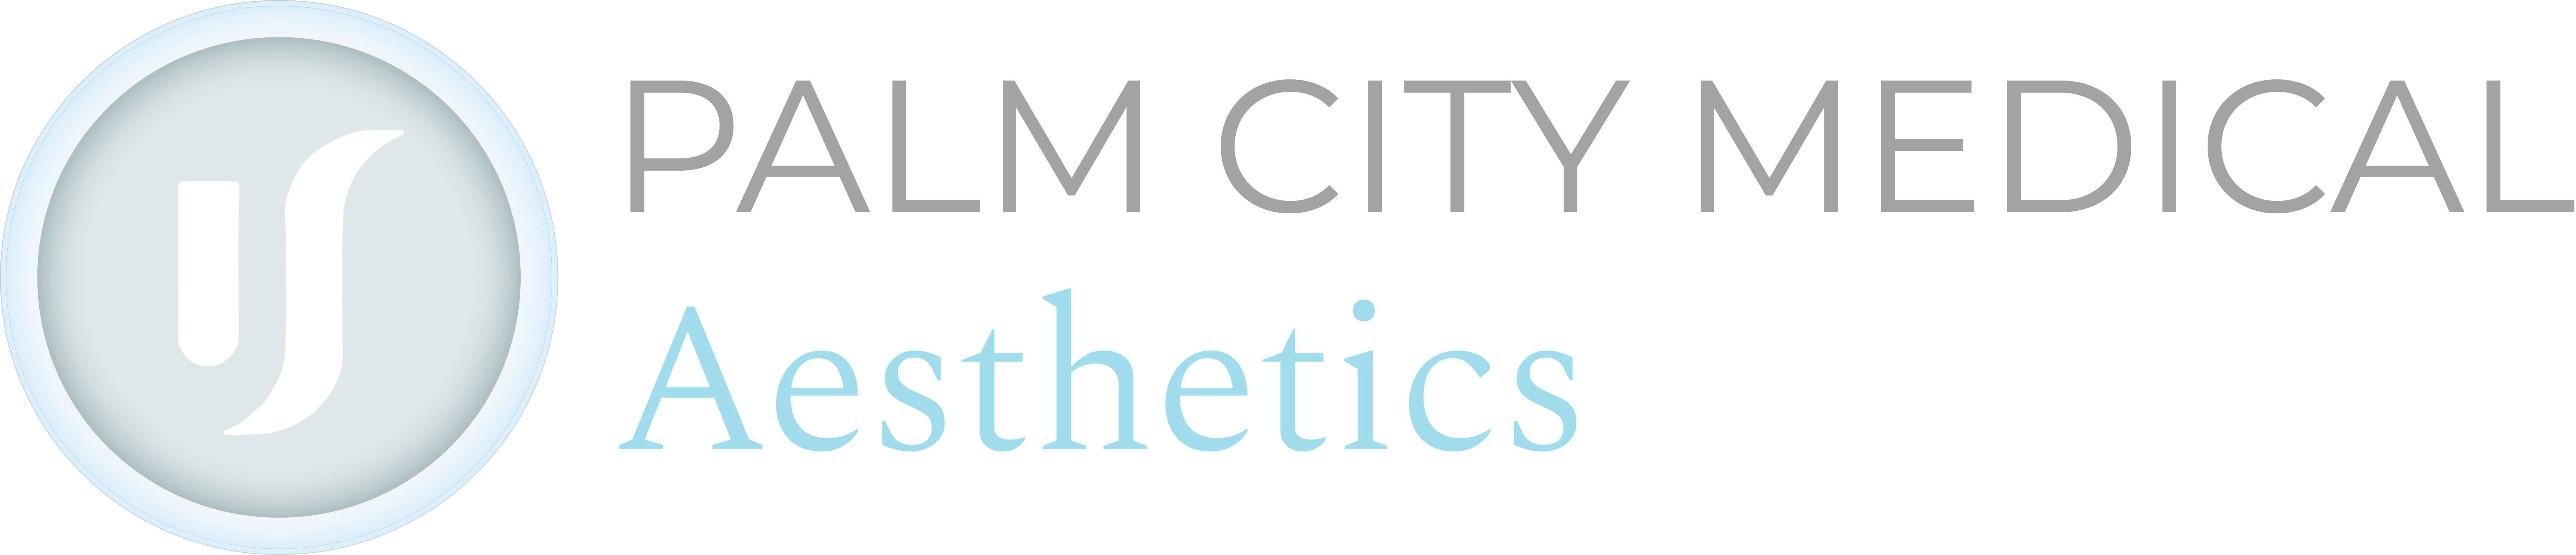 Palm City Medical Aesthetics Logo